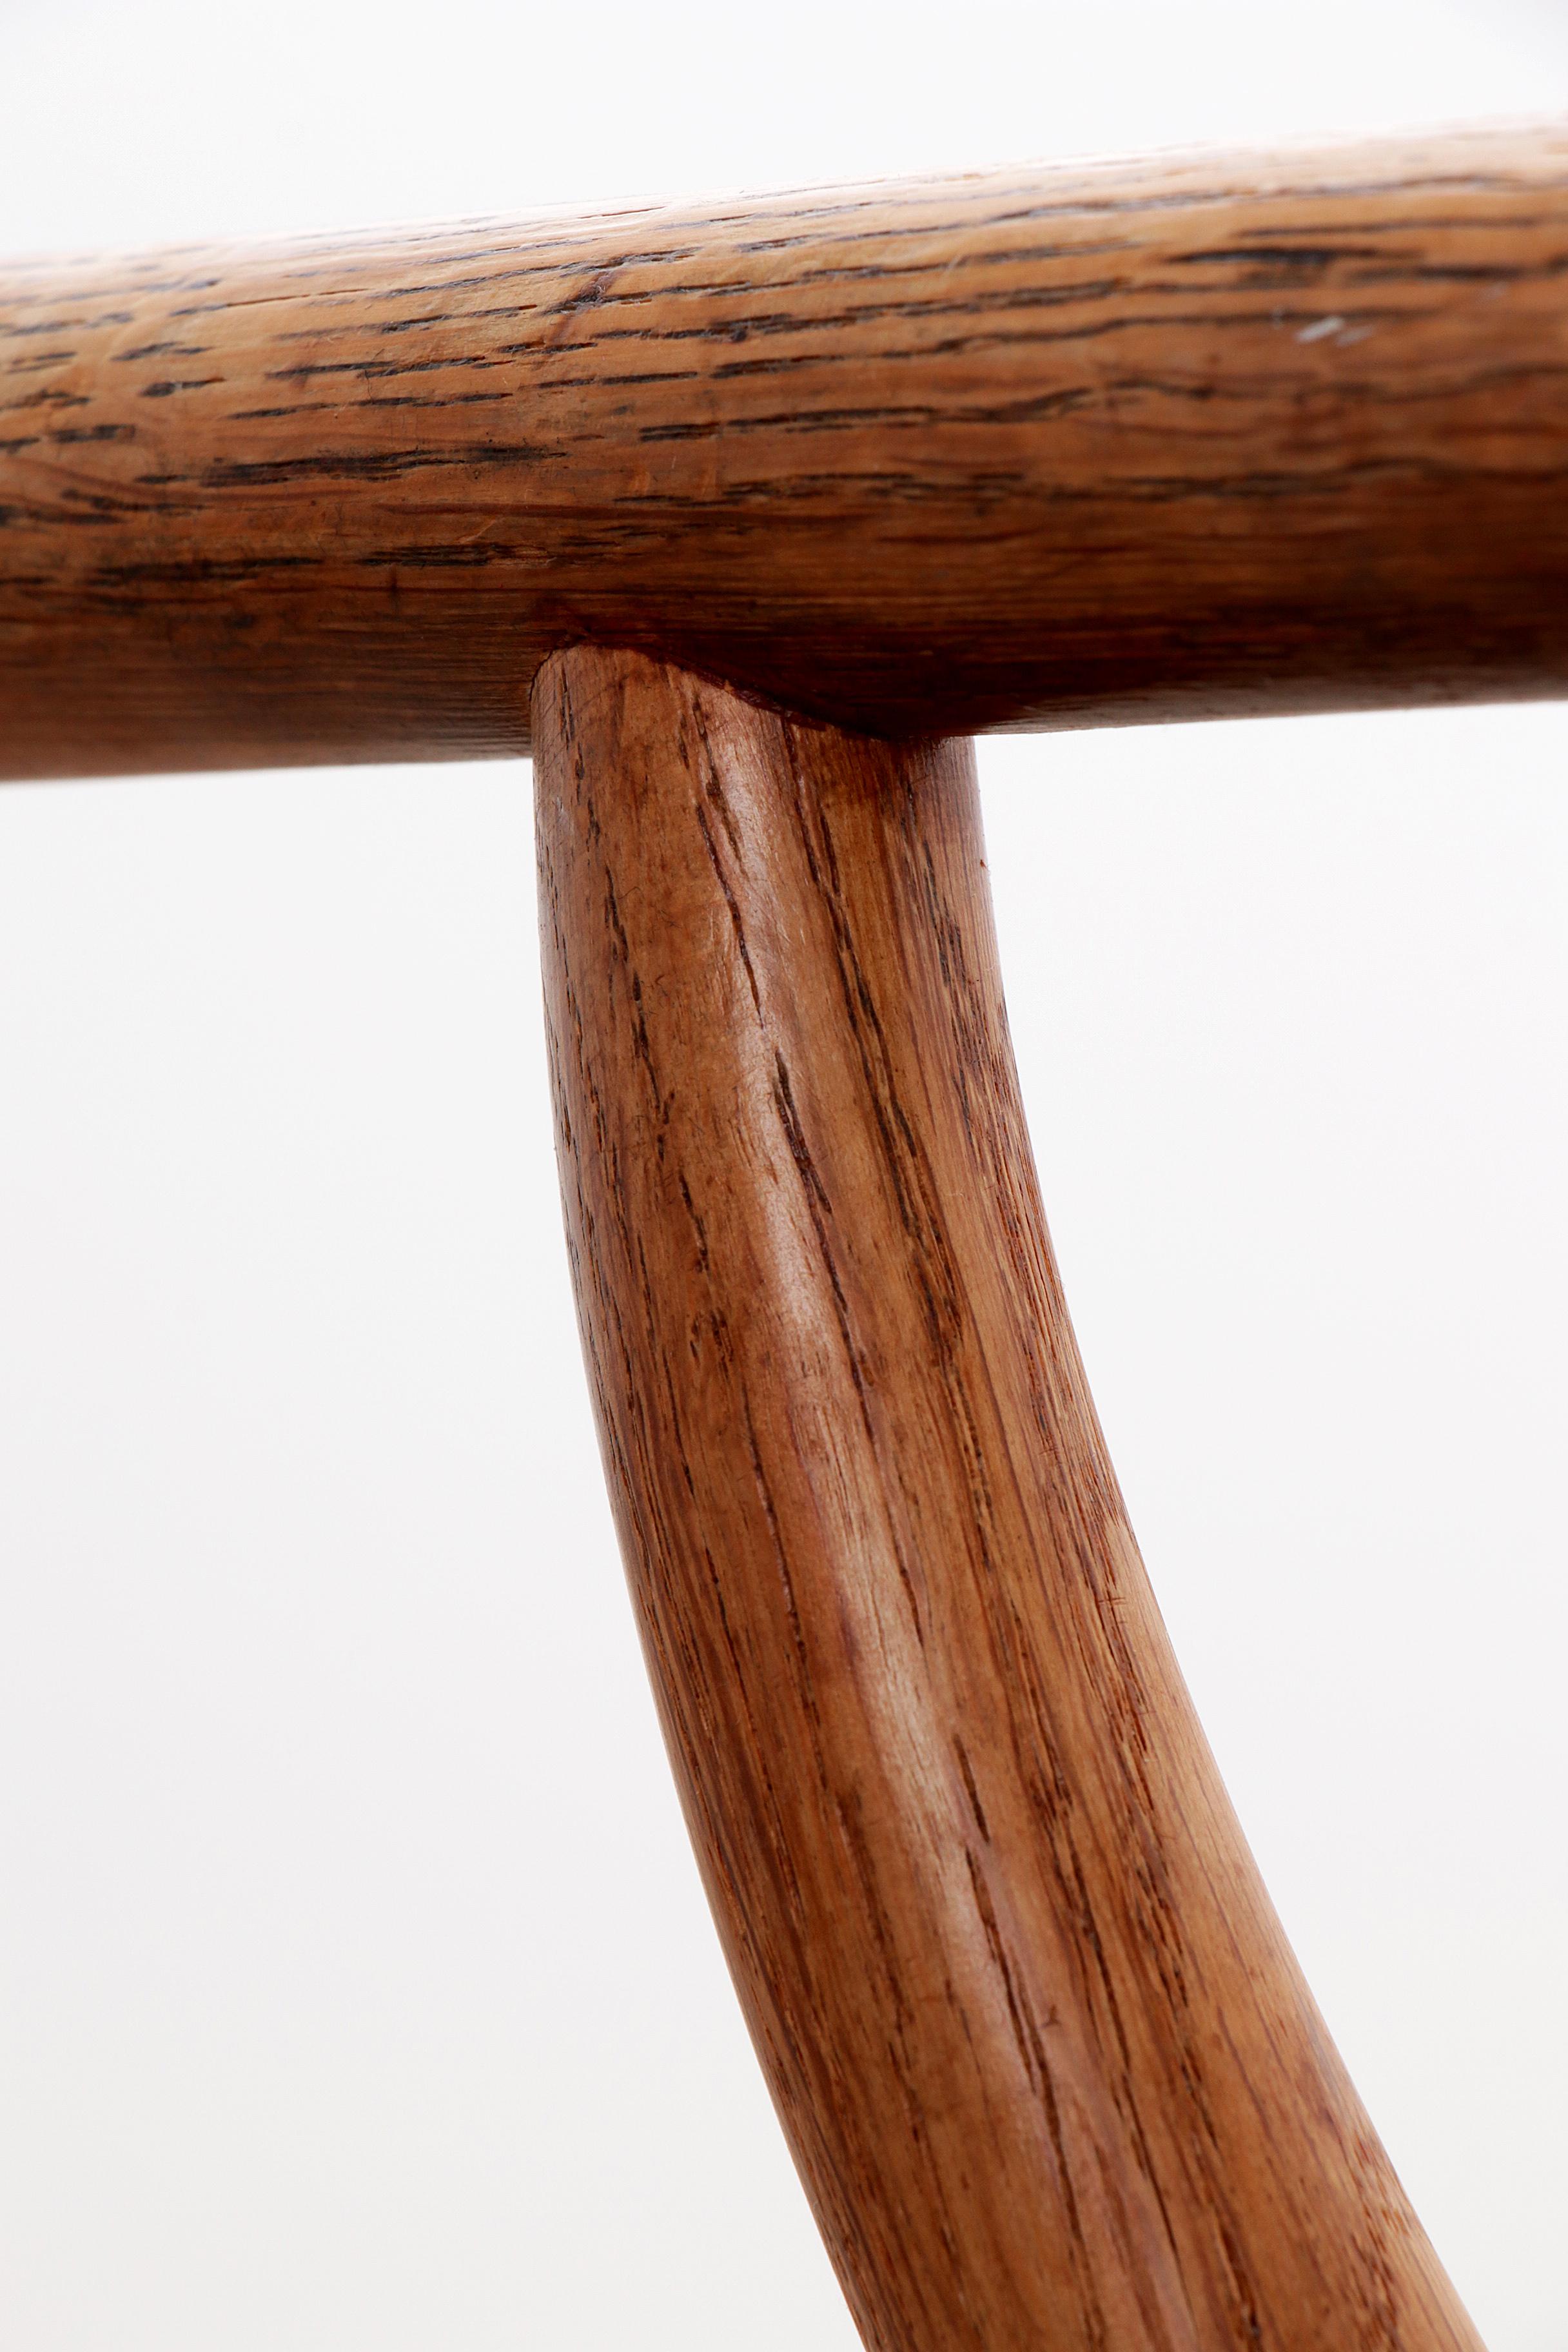 Hans Wegner Oak Wishbone Chairs made by Carl Hansen&Son 8